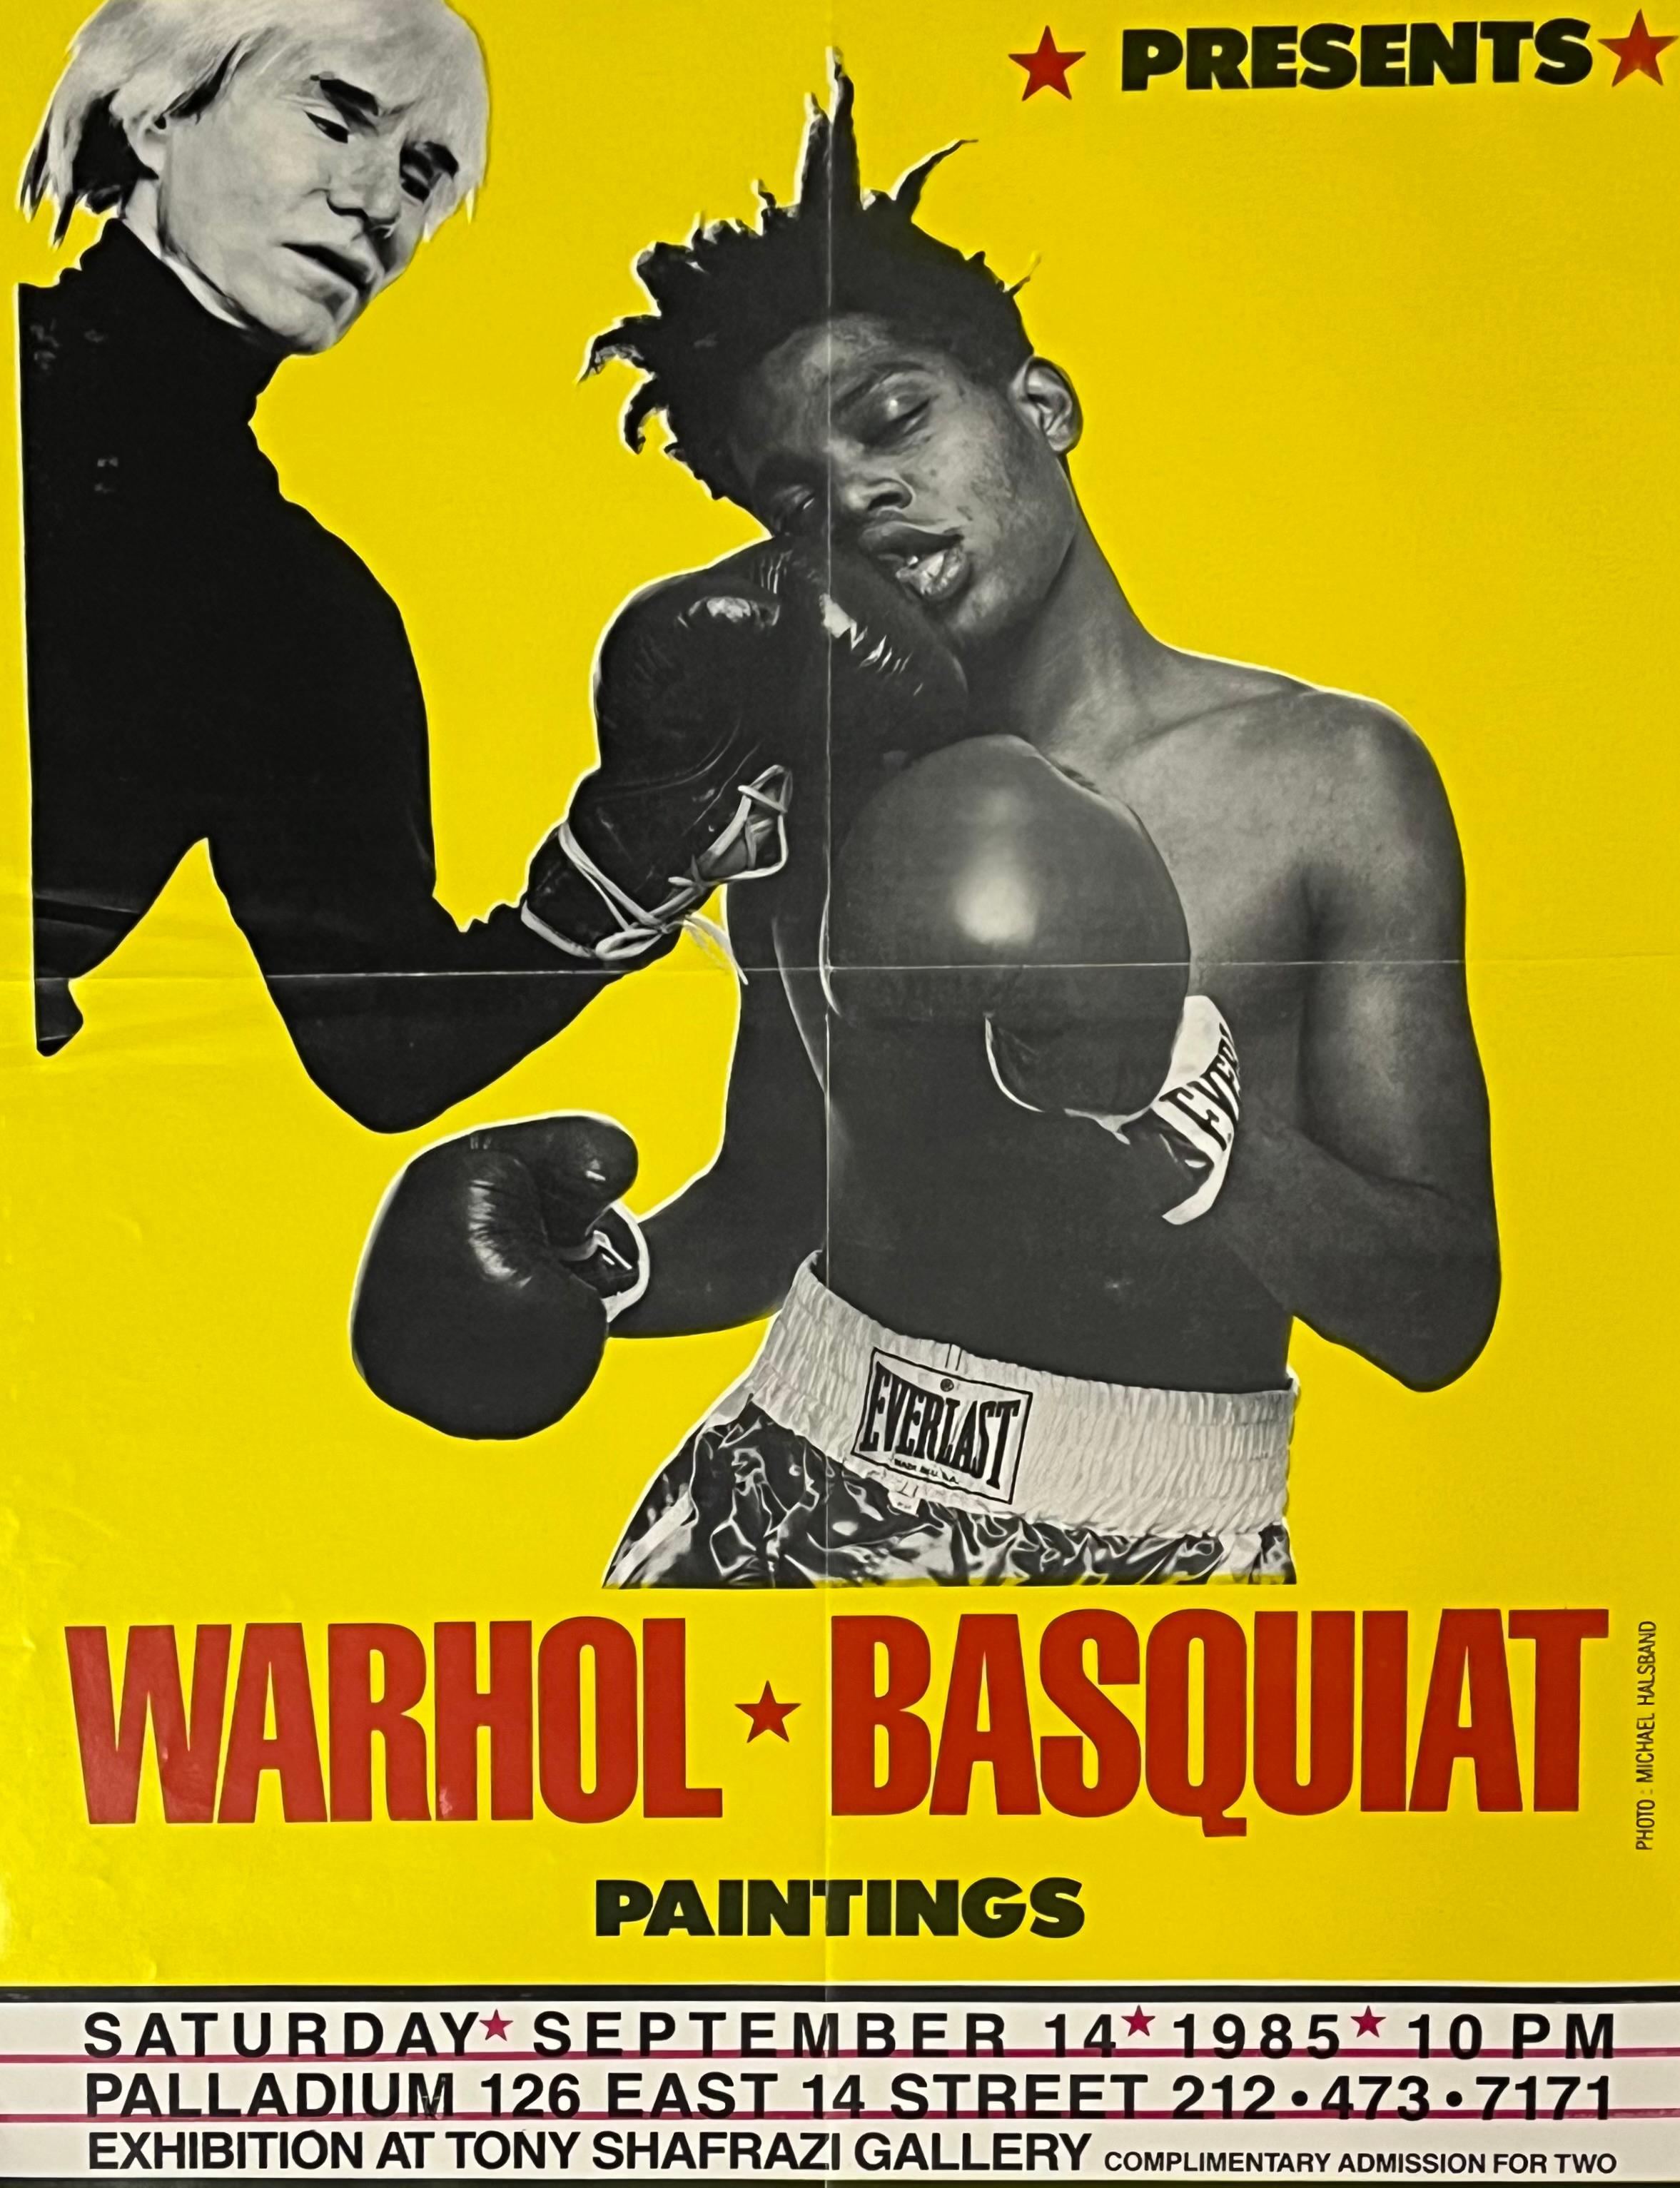 Affiche de boxe de Basquiat de Warhol (Basquiat Warhol boxing The Palladium) - Print de Michael Halsband